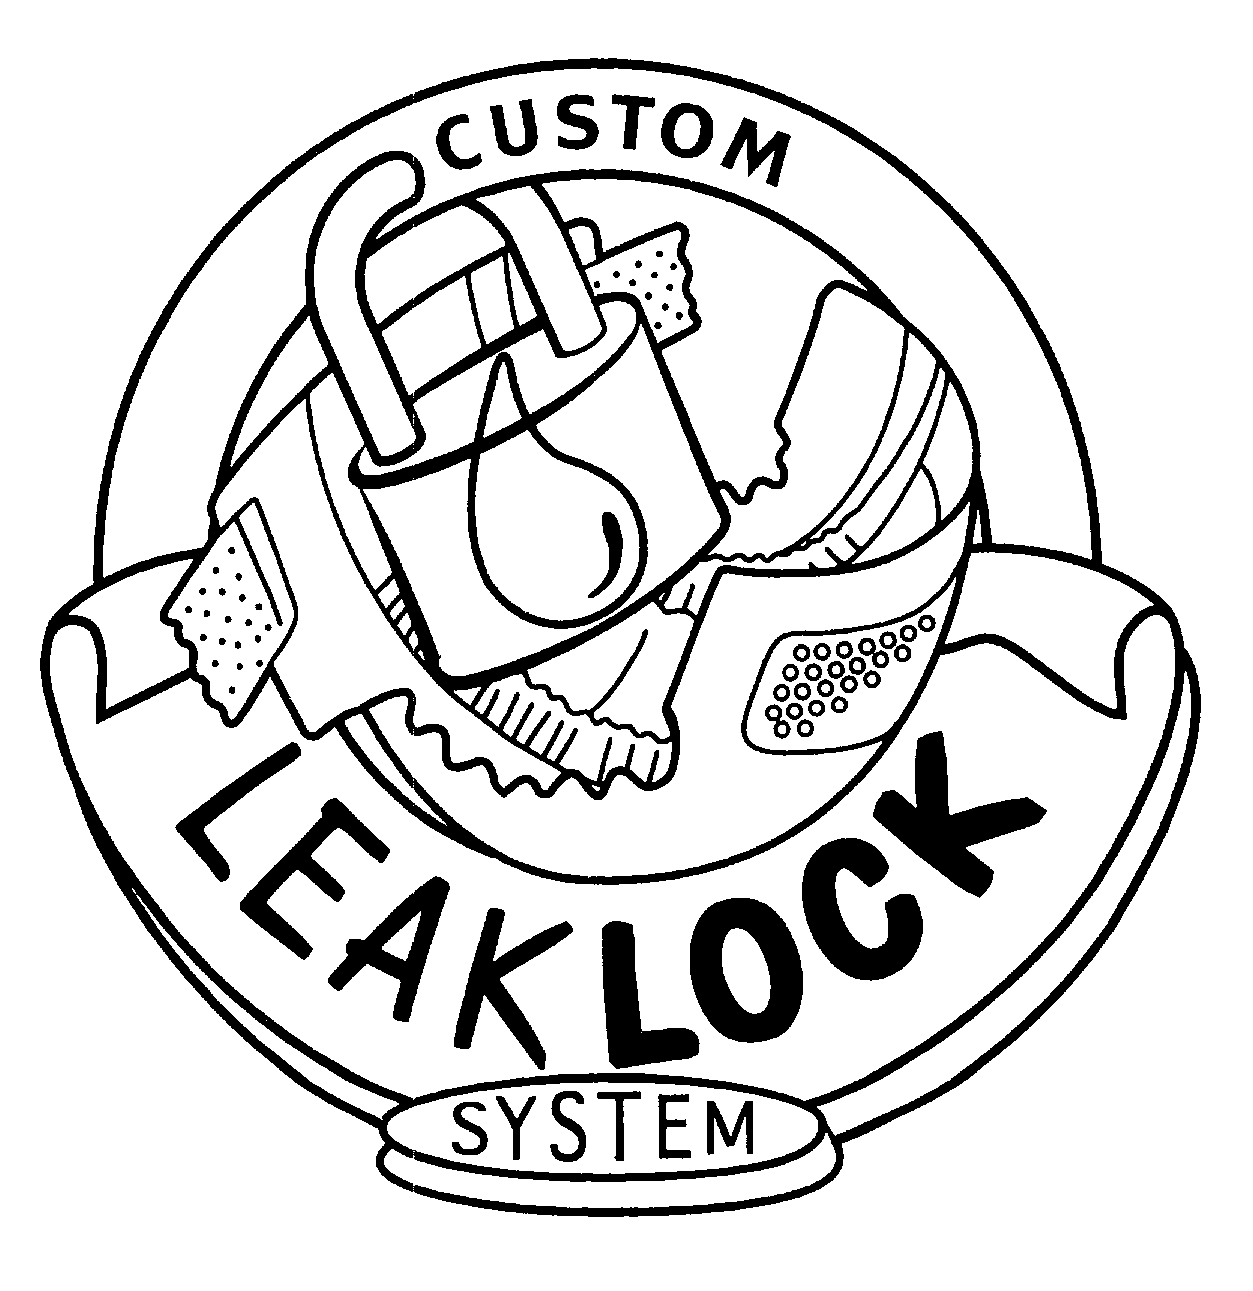  CUSTOM LEAKLOCK SYSTEM